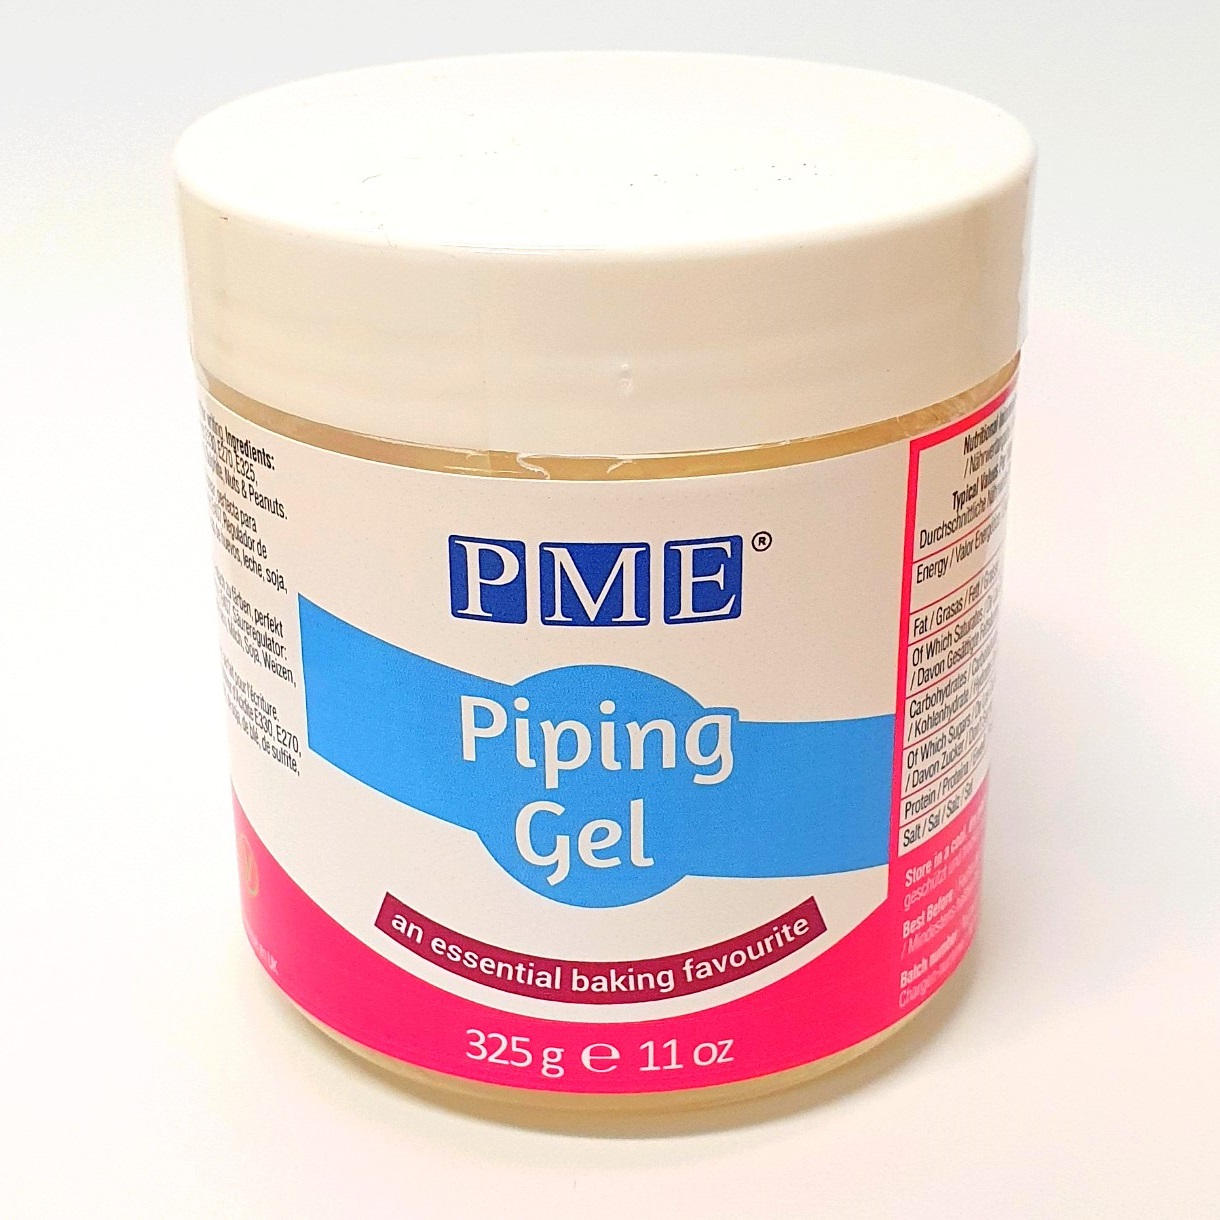 Piping gel 325g - PME